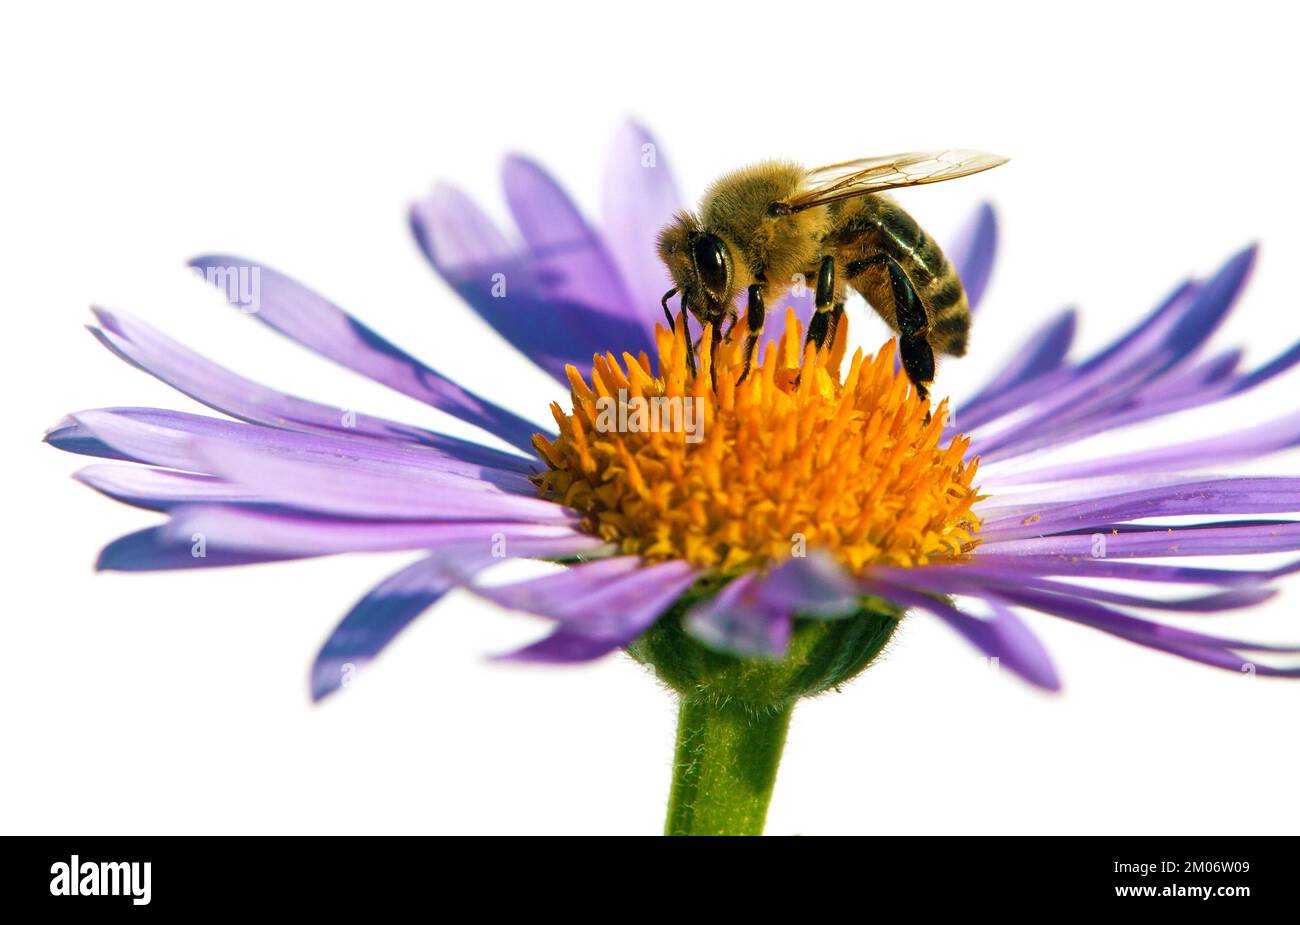 Ape o ape in latino Apis mellifera, ape miele europea o occidentale seduta sul viola blu o fiore viola isolato su sfondo bianco Foto Stock